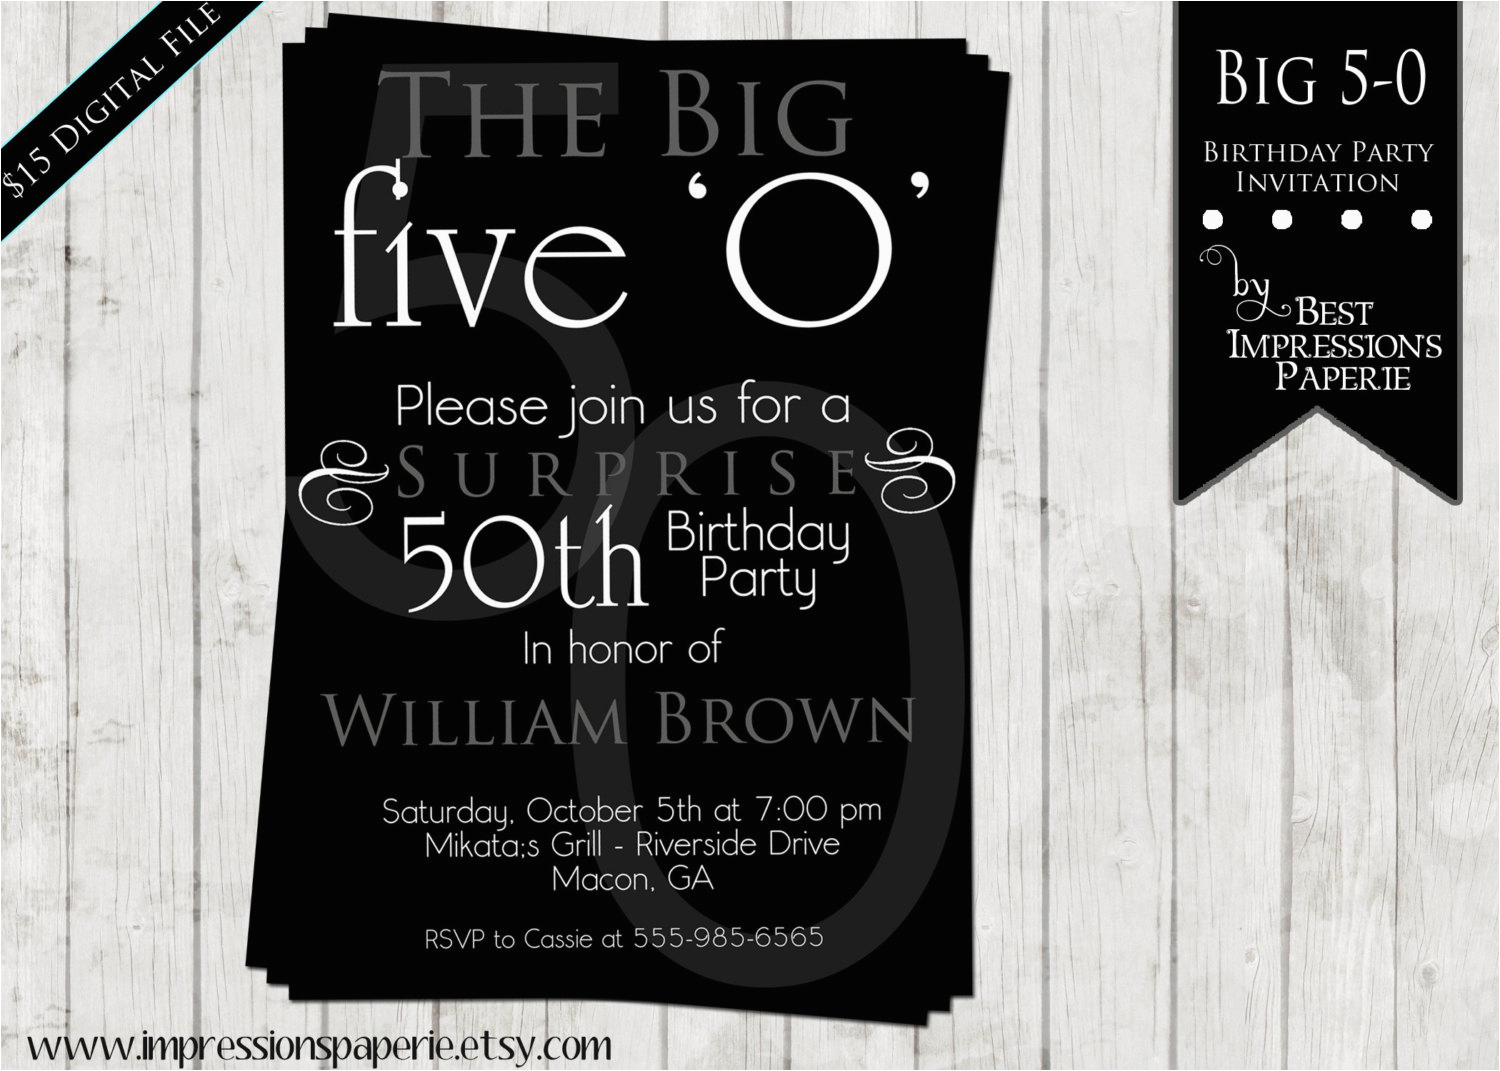 50th Birthday Party Invitation Samples 50th Birthday Party Invitations for Men Dolanpedia